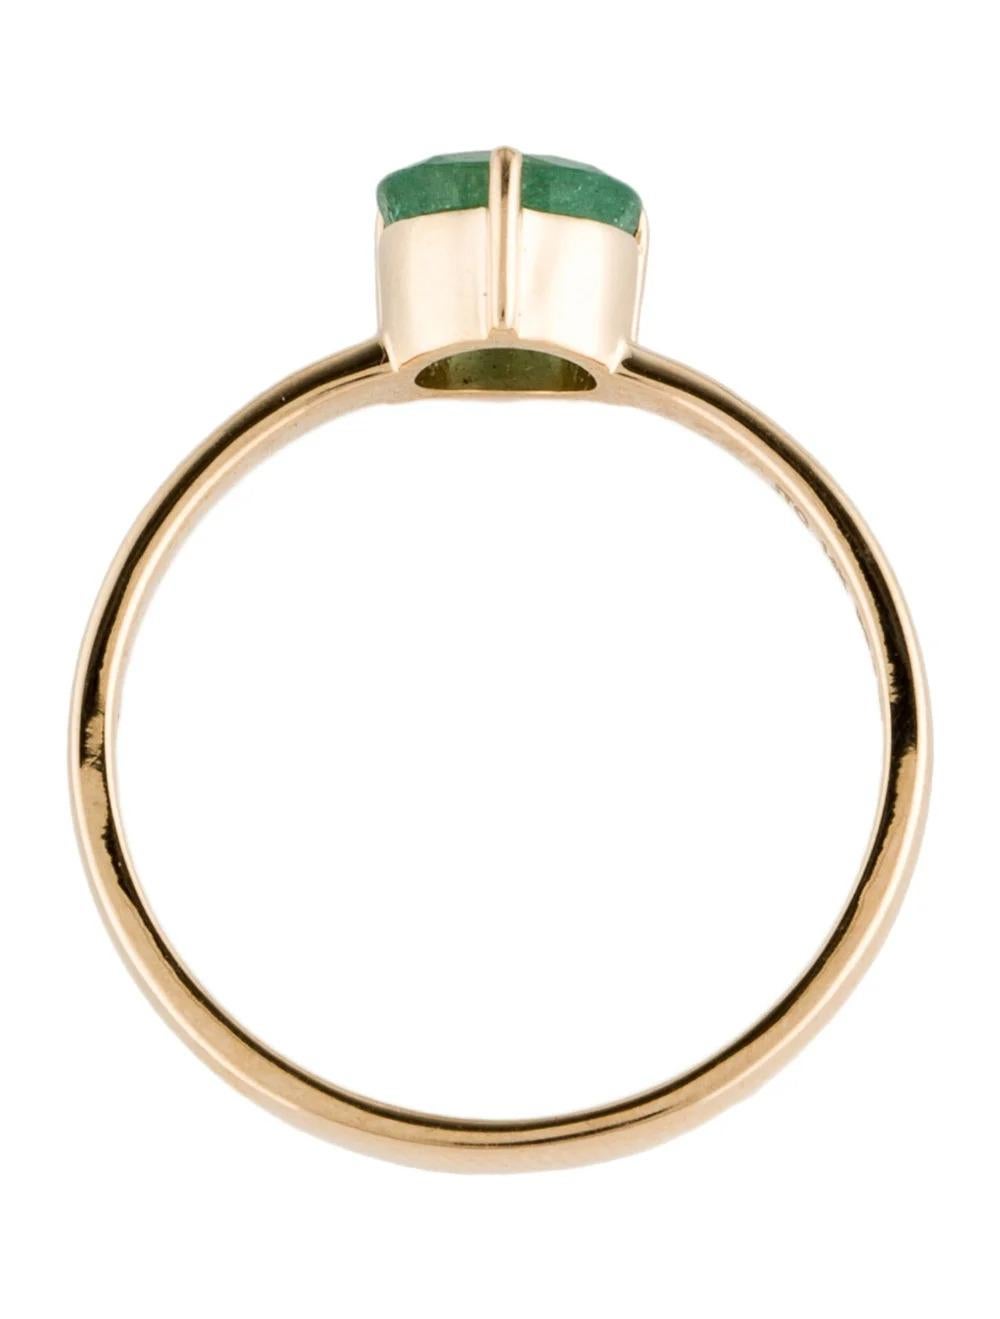 Women's Vintage 14K Emerald Cocktail Ring, Size 6.75 - Elegant Green Gemstone Jewelry For Sale